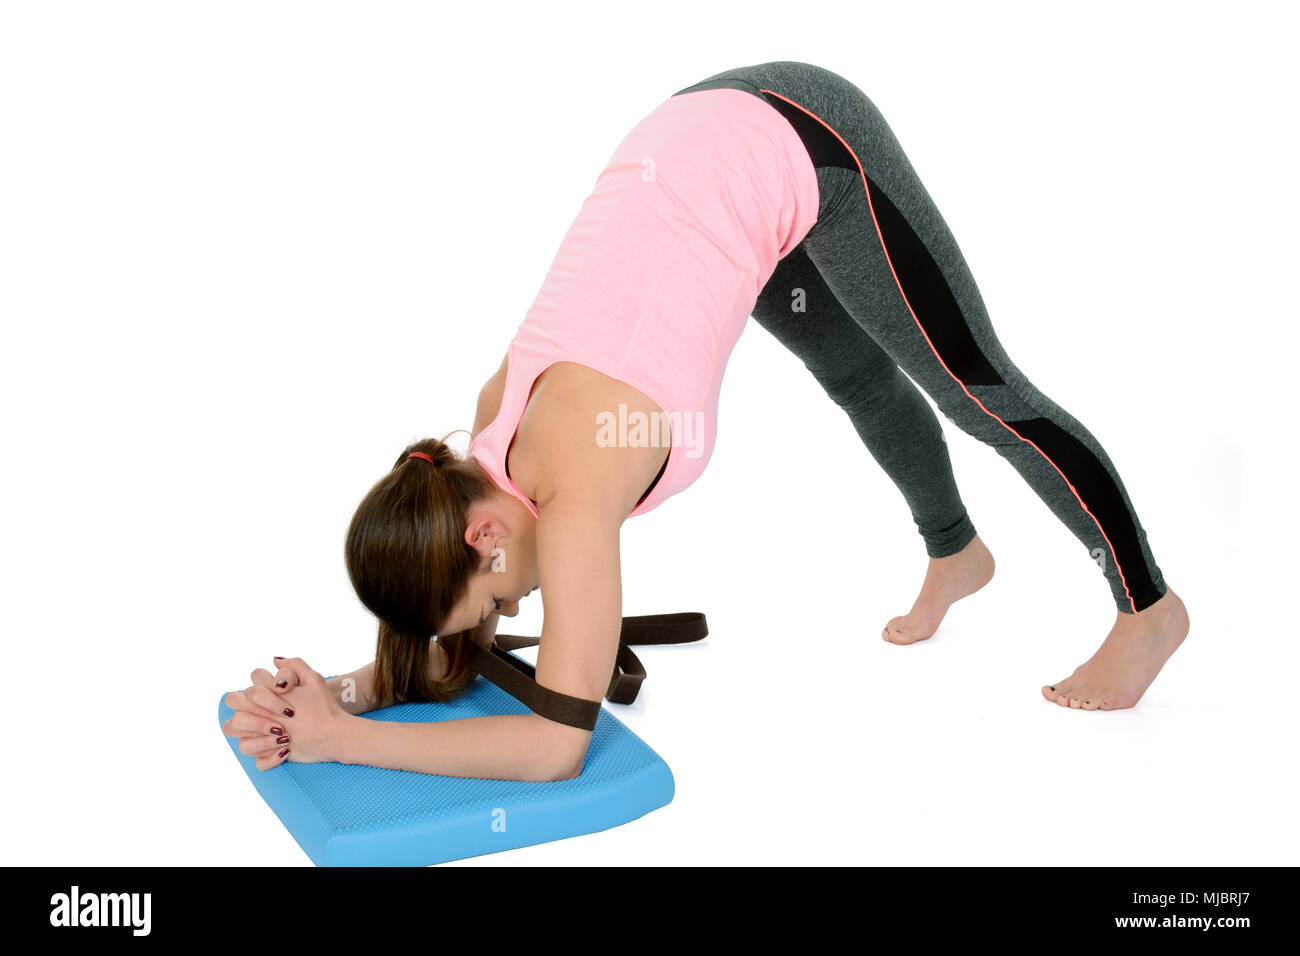 How to do Dolphin Pose - Yoga Tutorial - YouTube